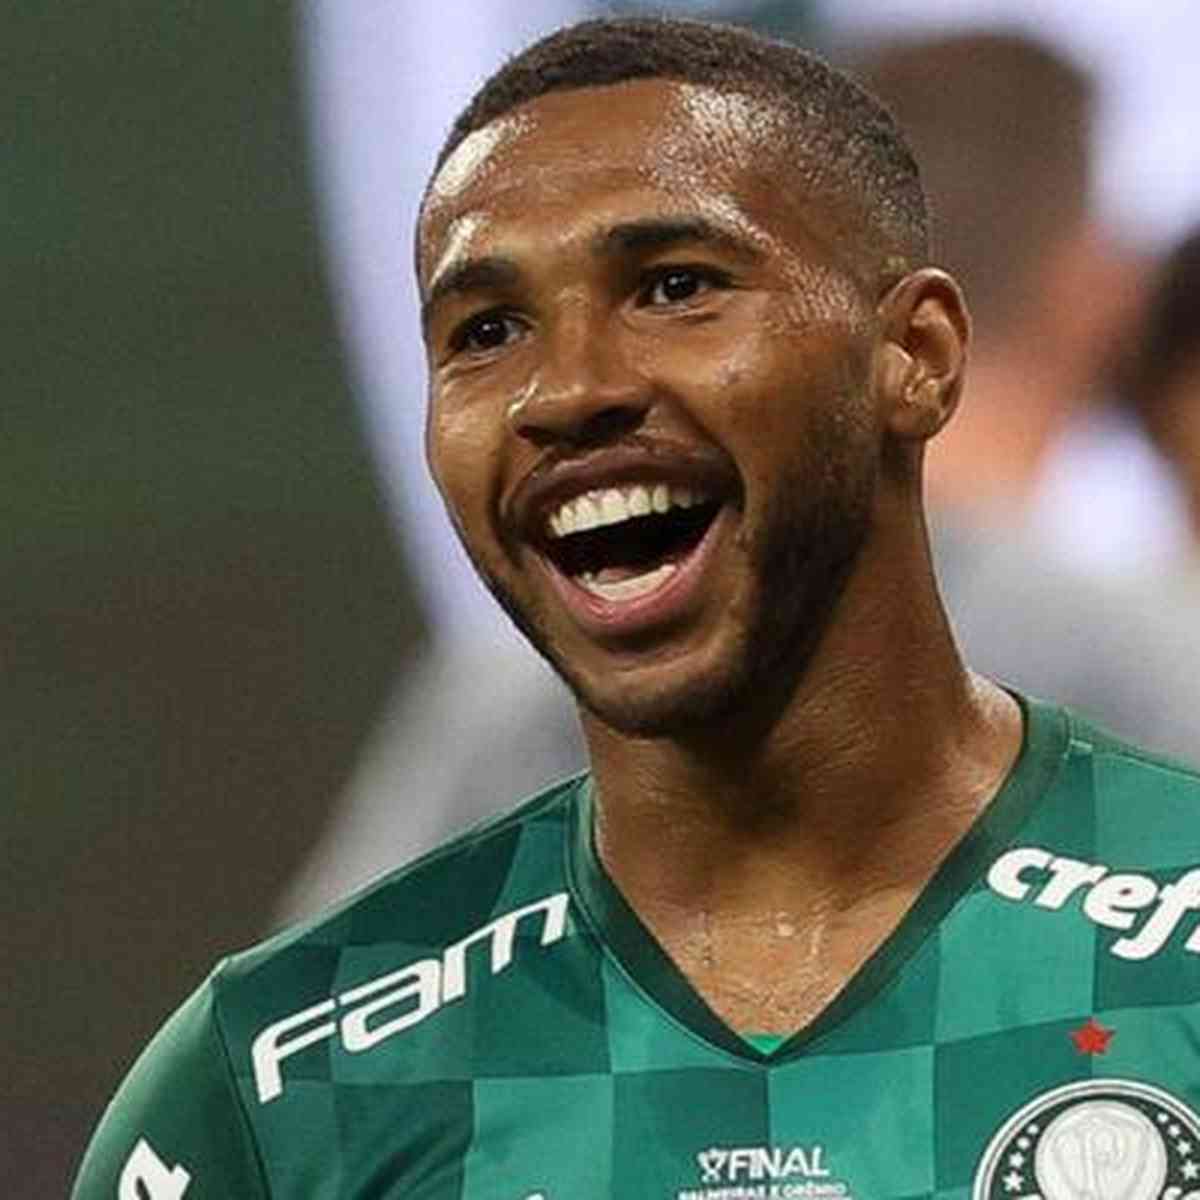 Cruzeiro chega a acordo com Palmeiras e anuncia atacante Wesley